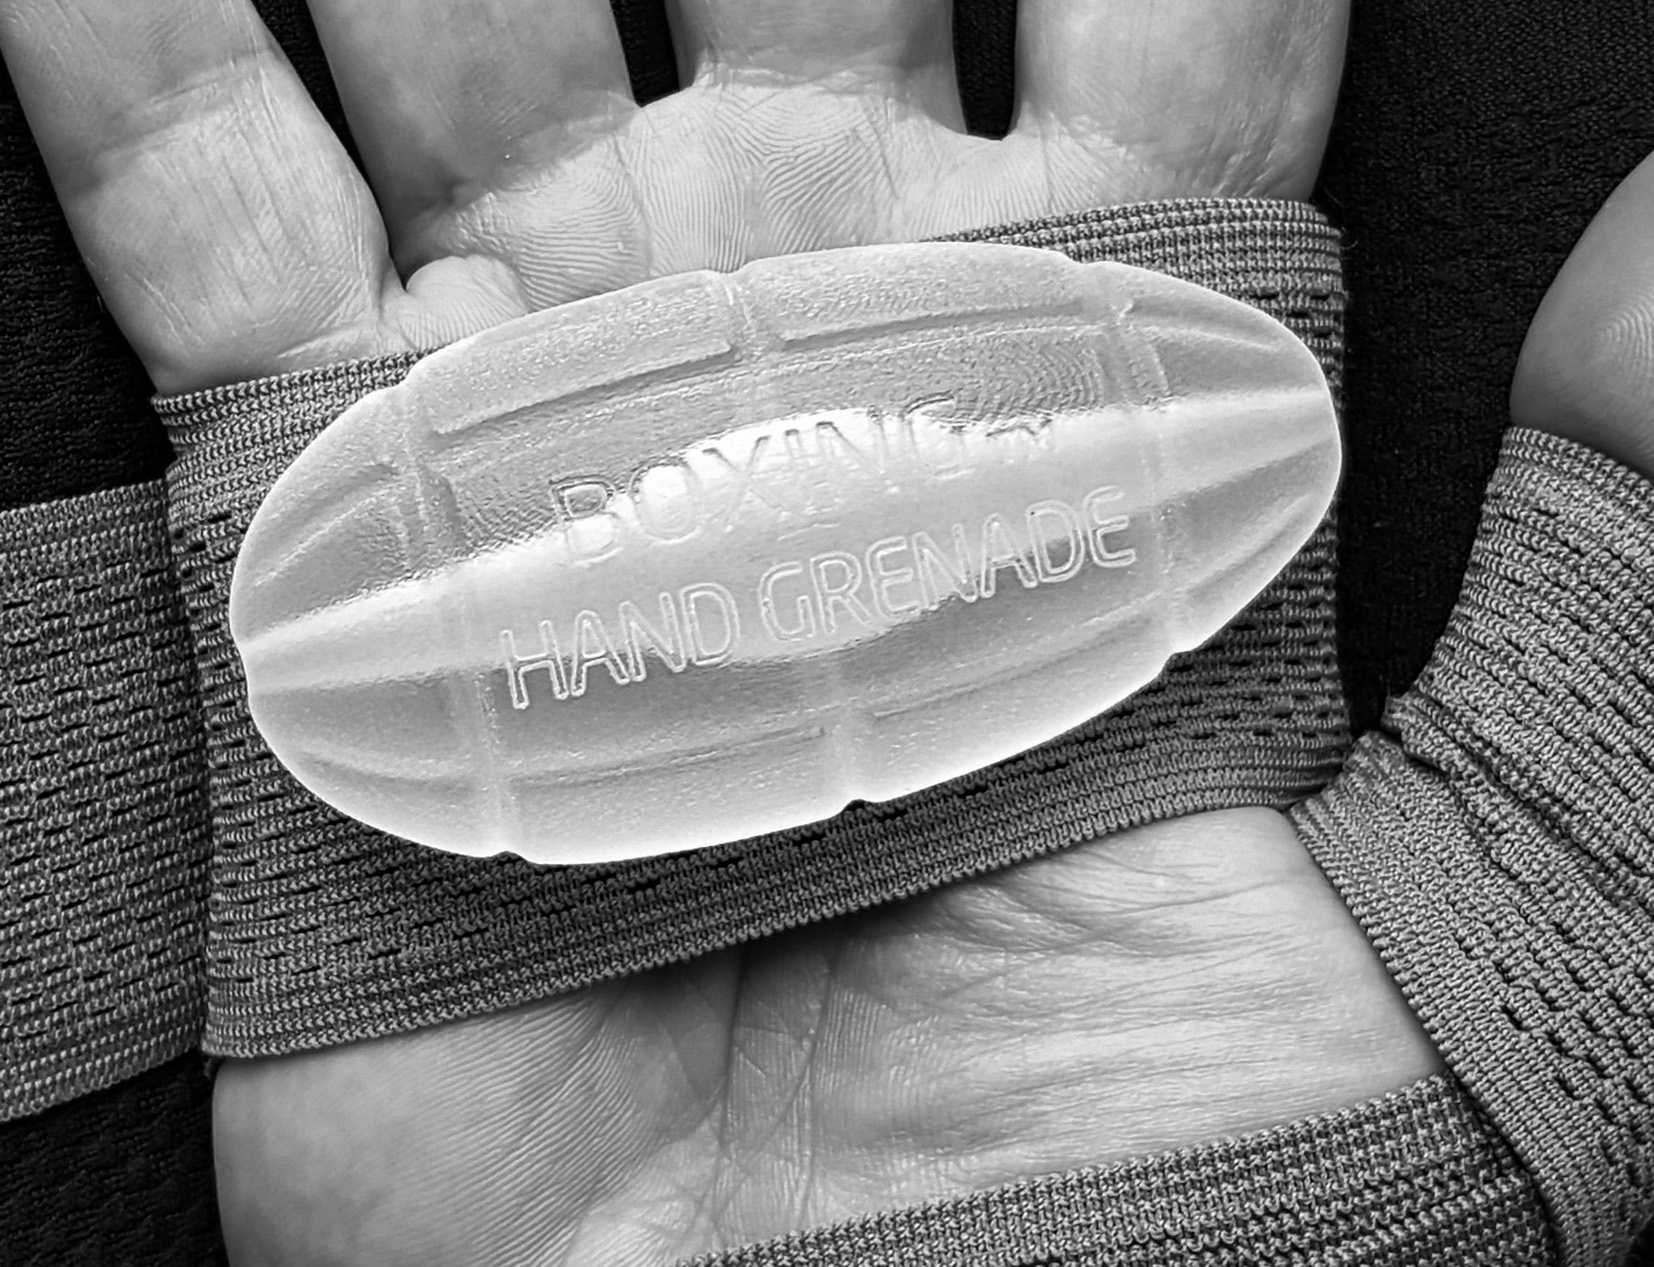 The Boxing Hand Grenade. Photo via Protolabs.